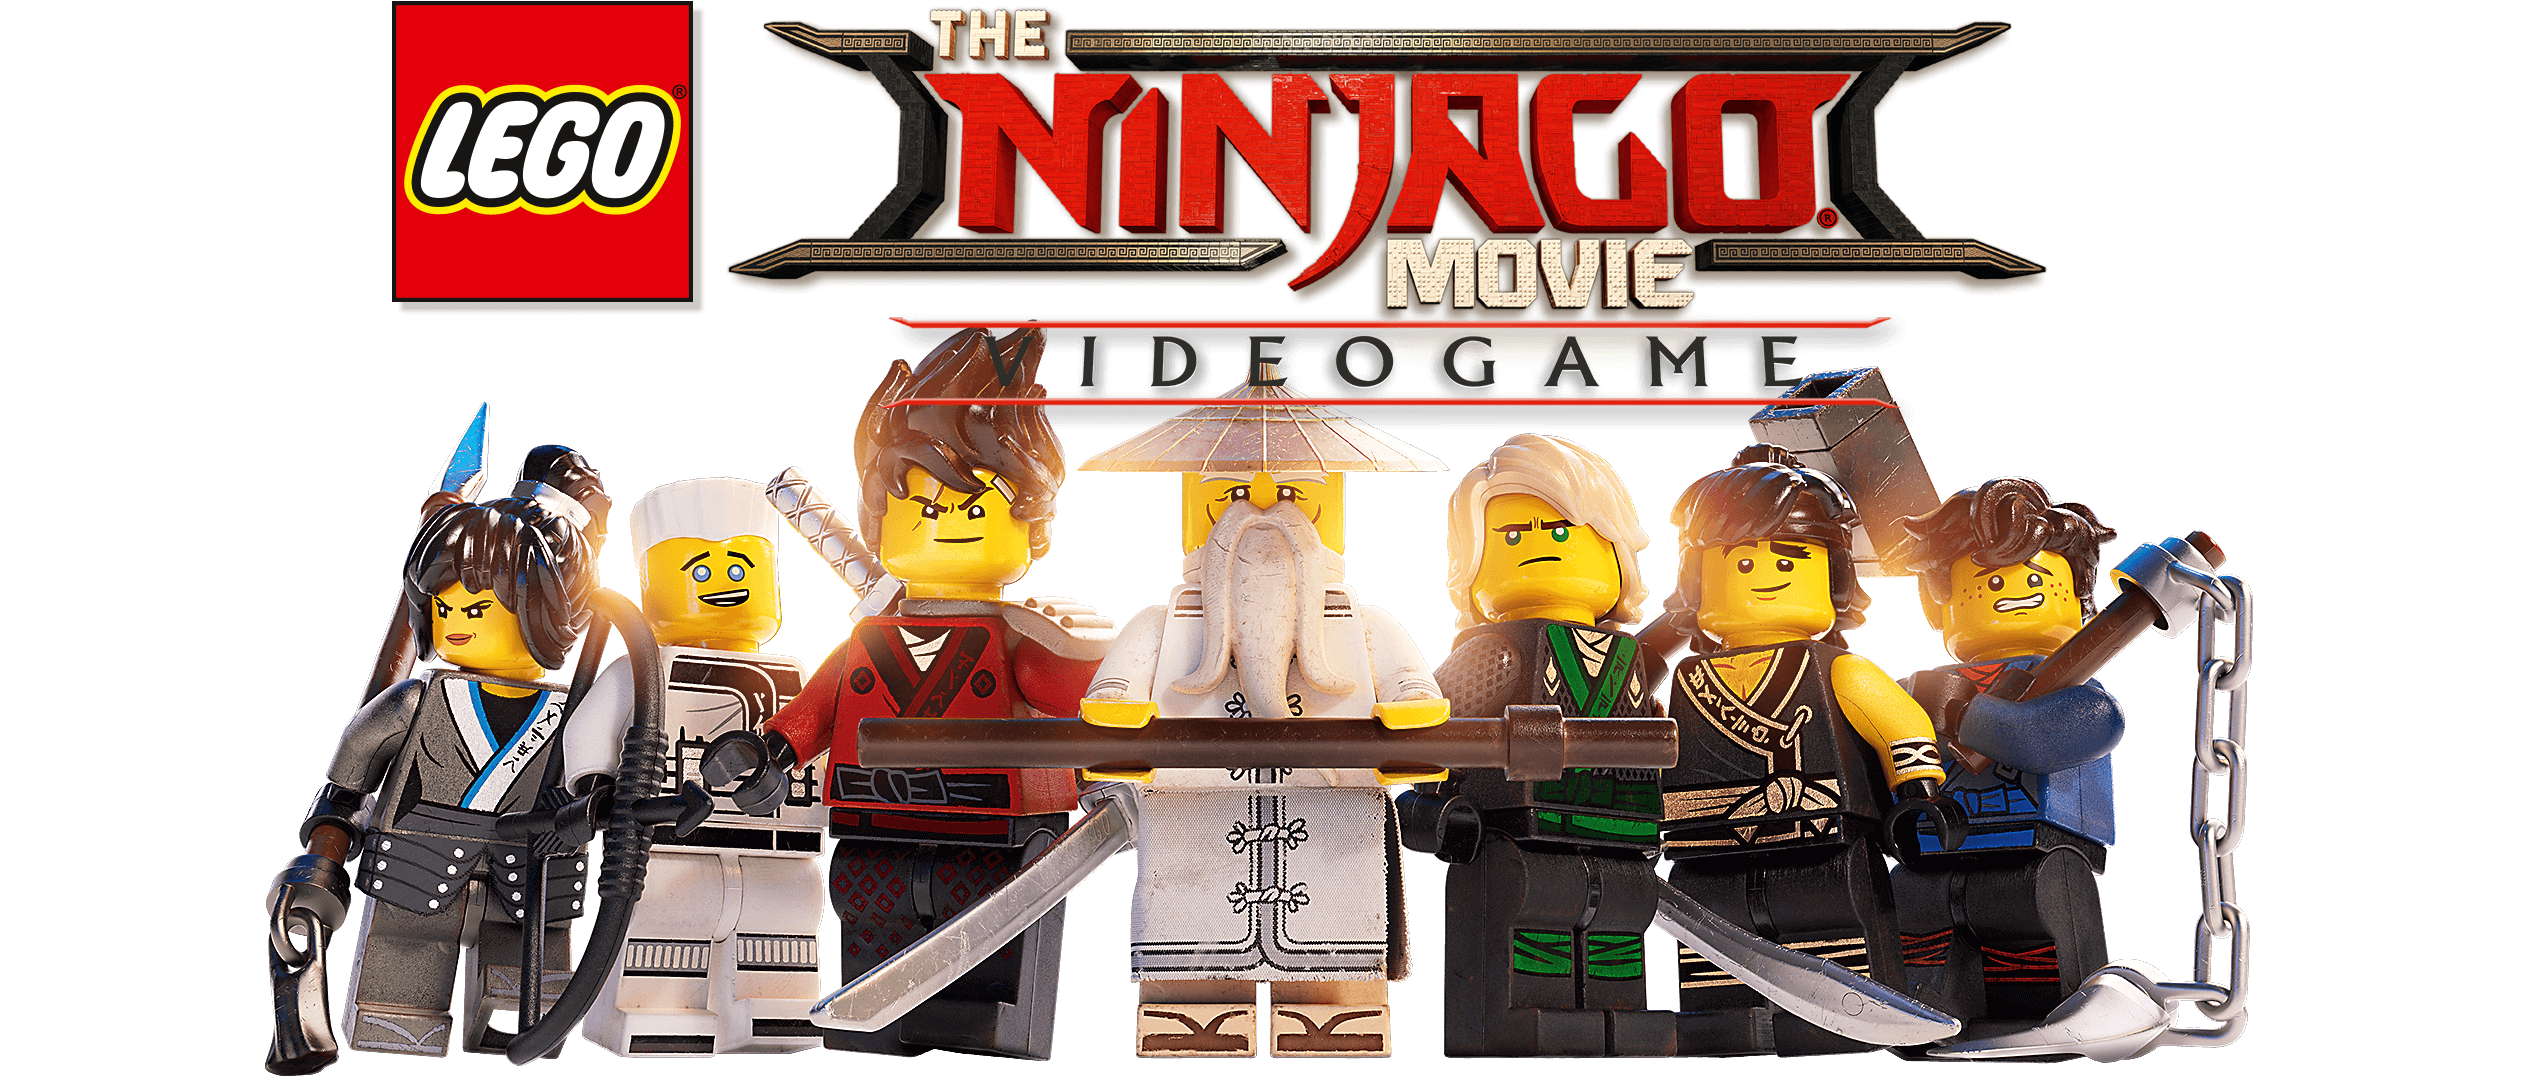 free-the-lego-ninjago-movie-video-game-on-steam-gamethroughs